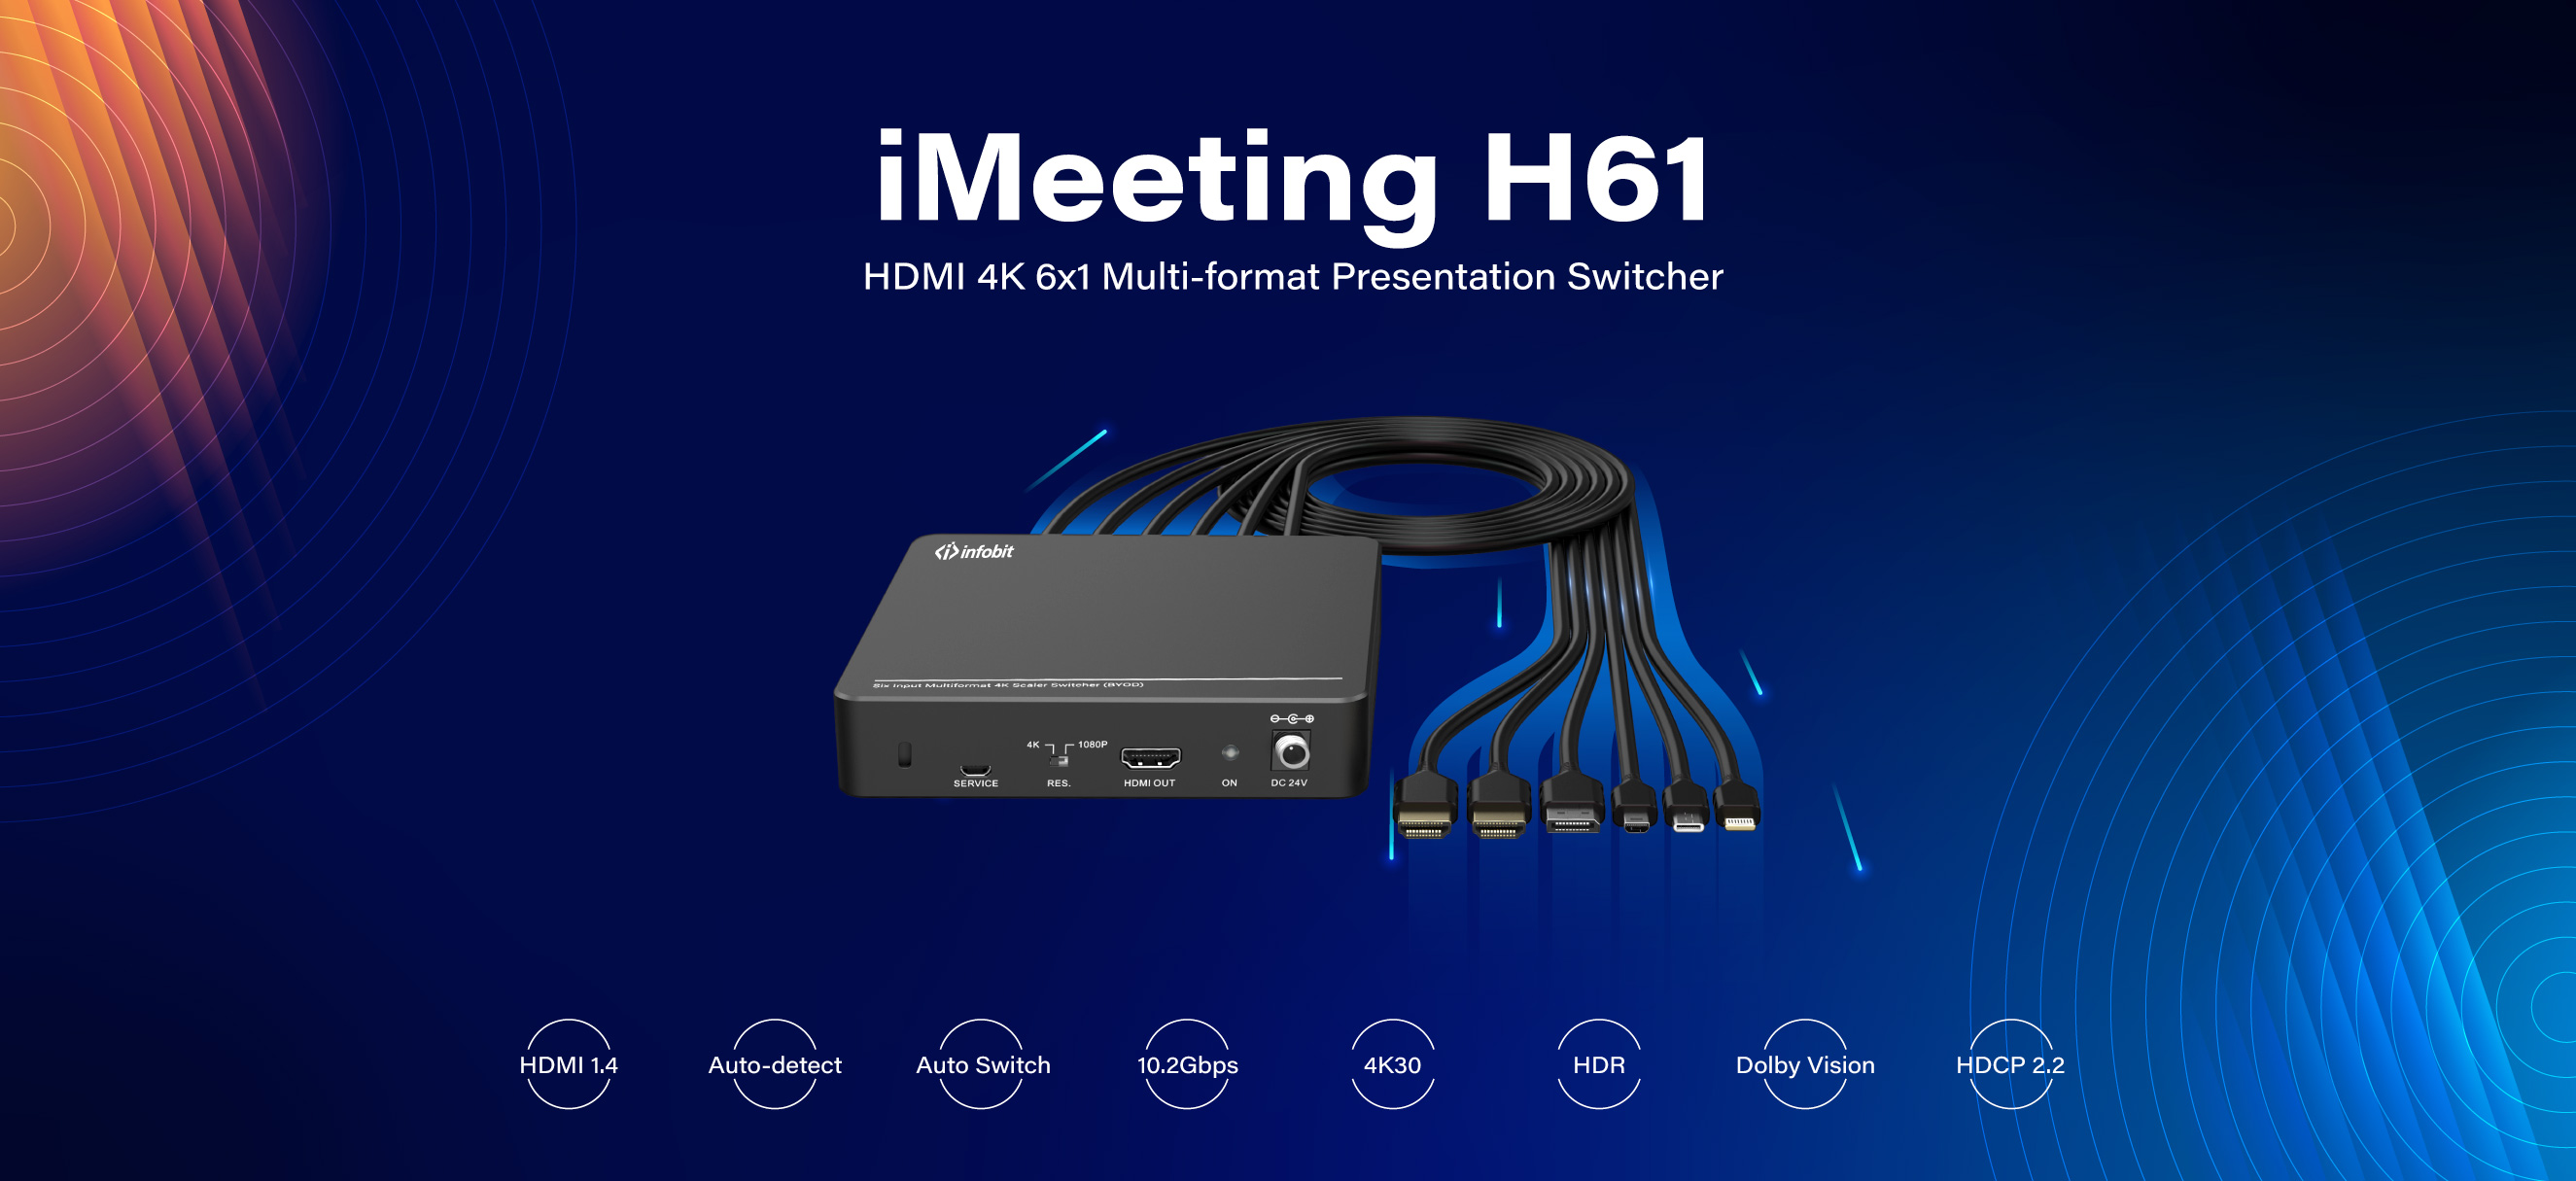 HDMI 4K 6x1 Multi-format presentation switcher